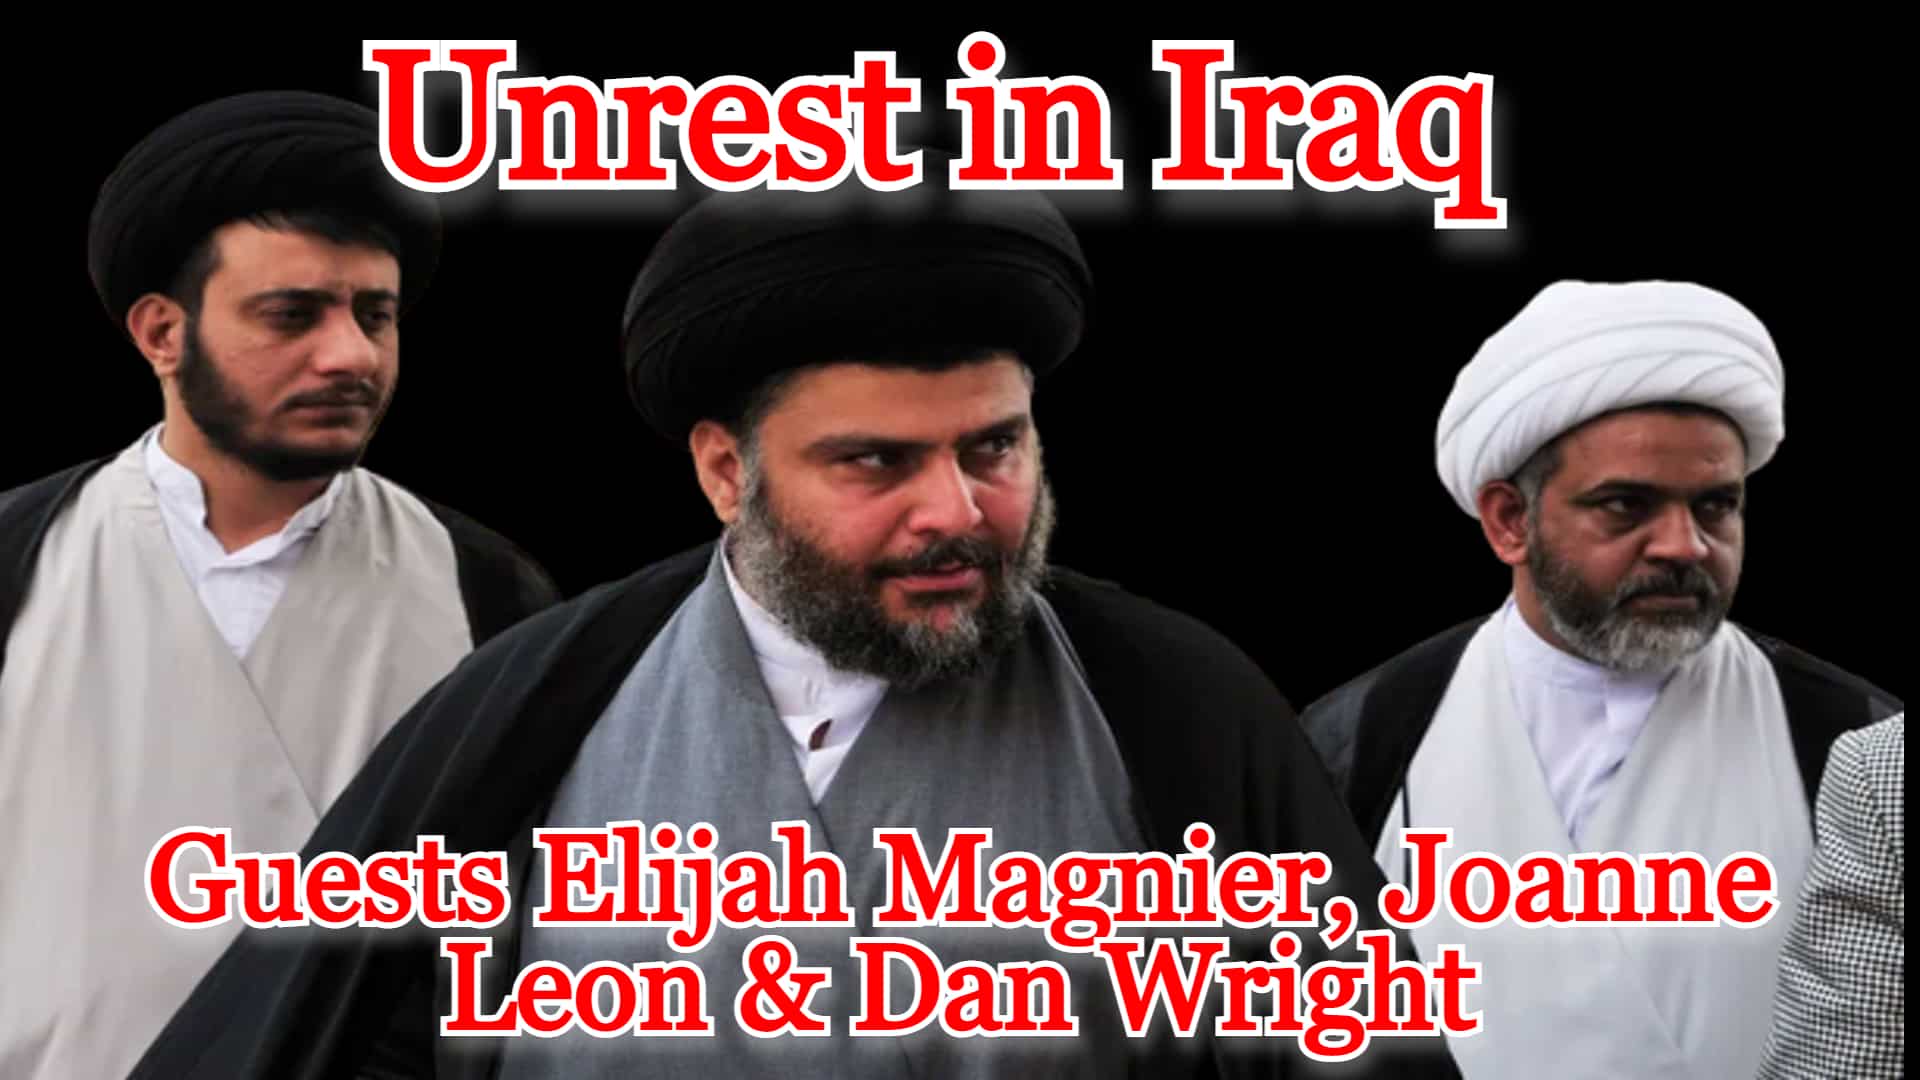 COI #323: Unrest in Iraq with Elijah Magnier, Joanne Leon & Dan Wright